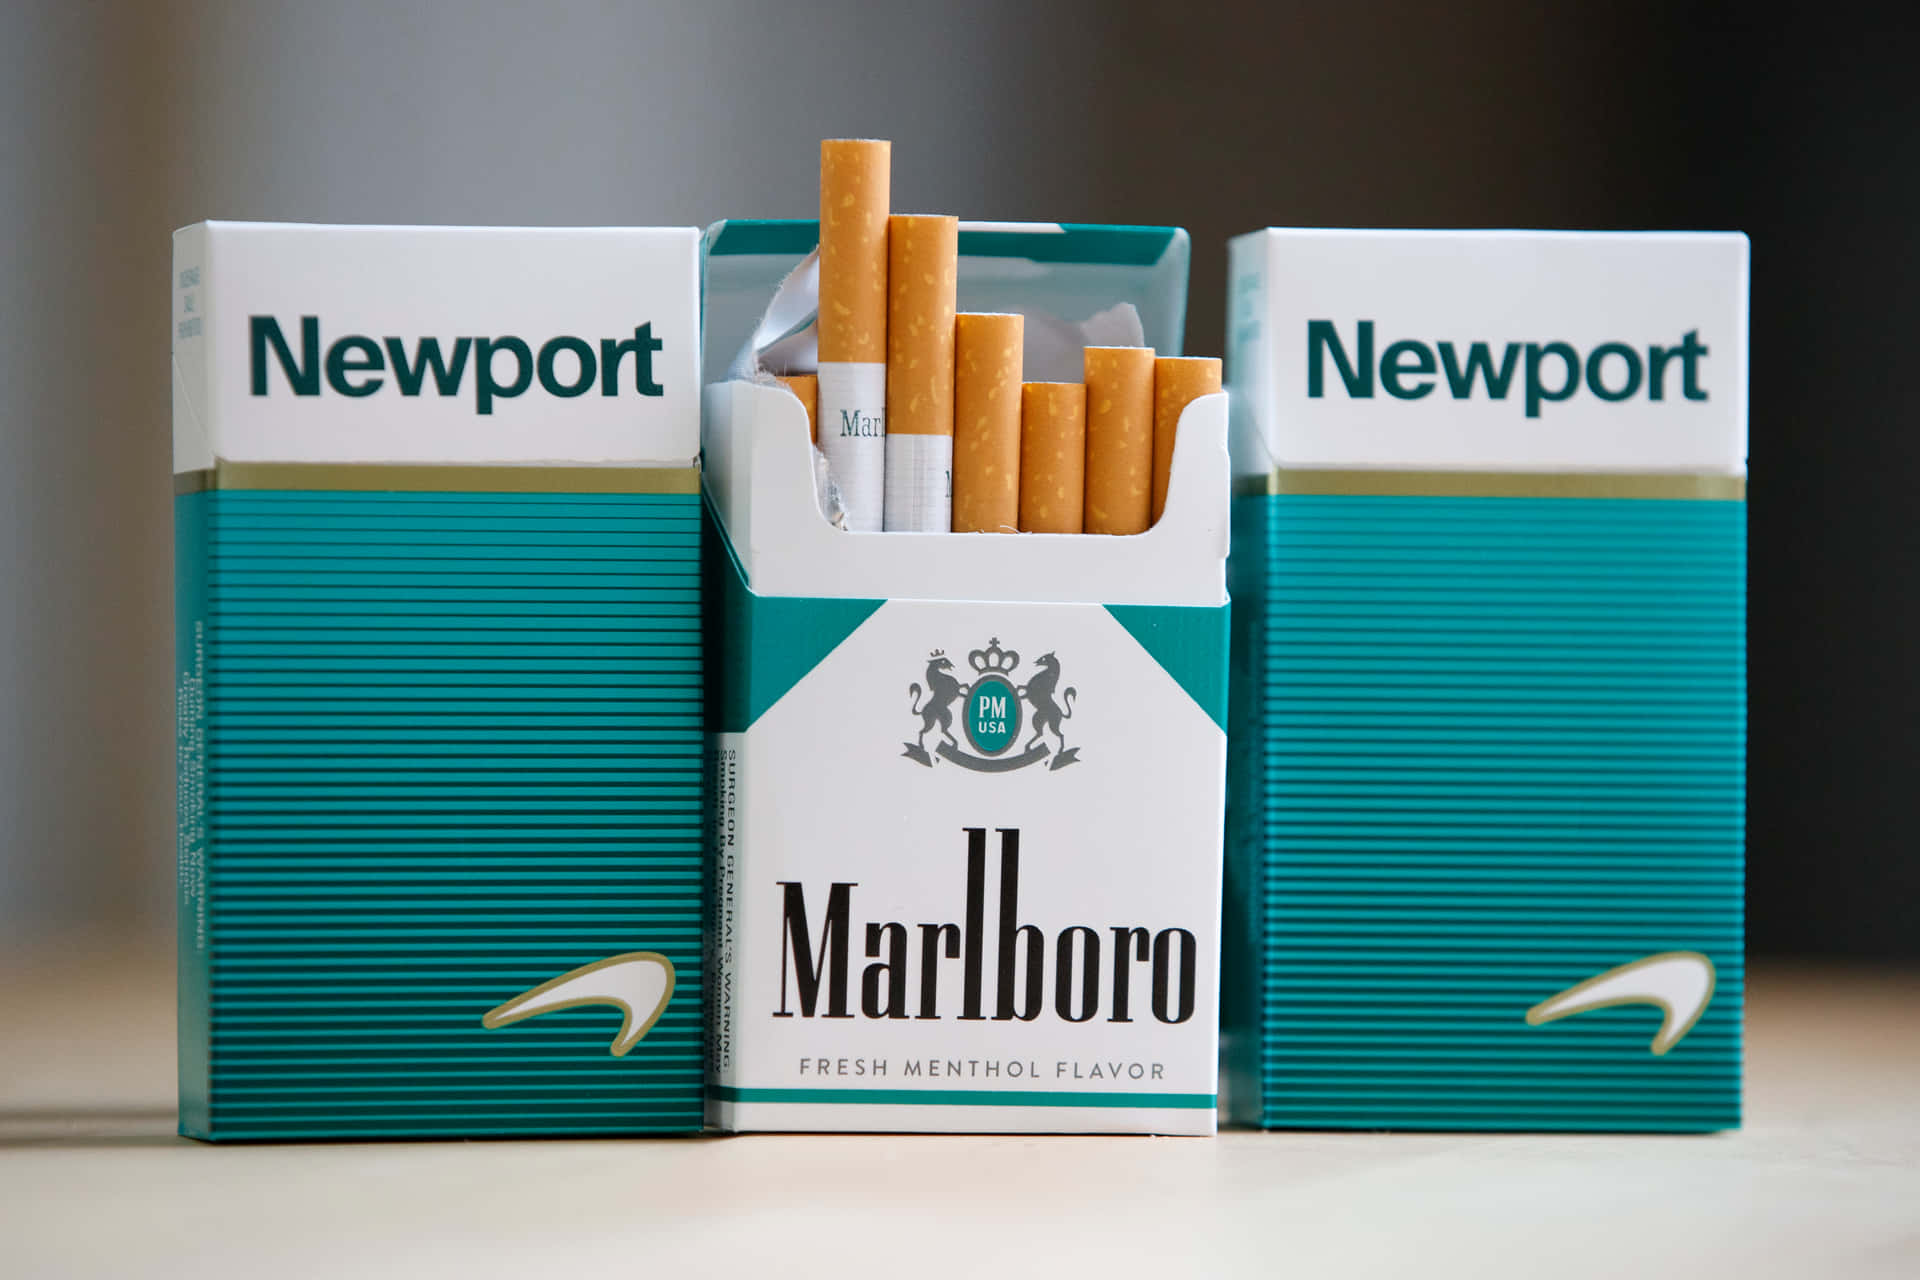 Imagende Cigarrillo Marlboro Newport.